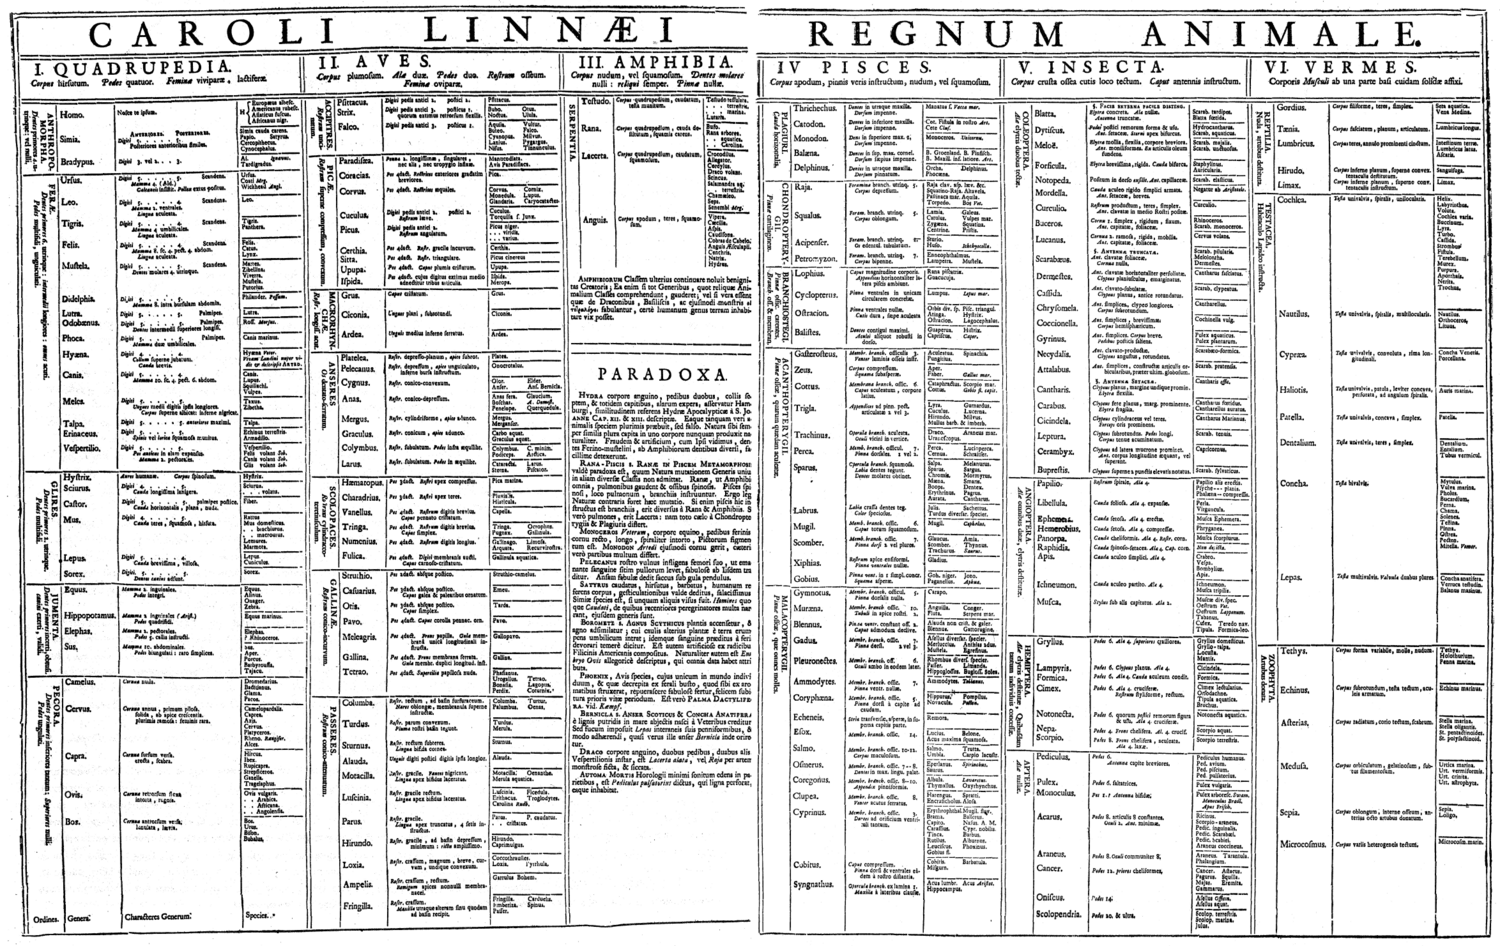 Таблица Царства животных из первого издания Systema Naturae (1735)